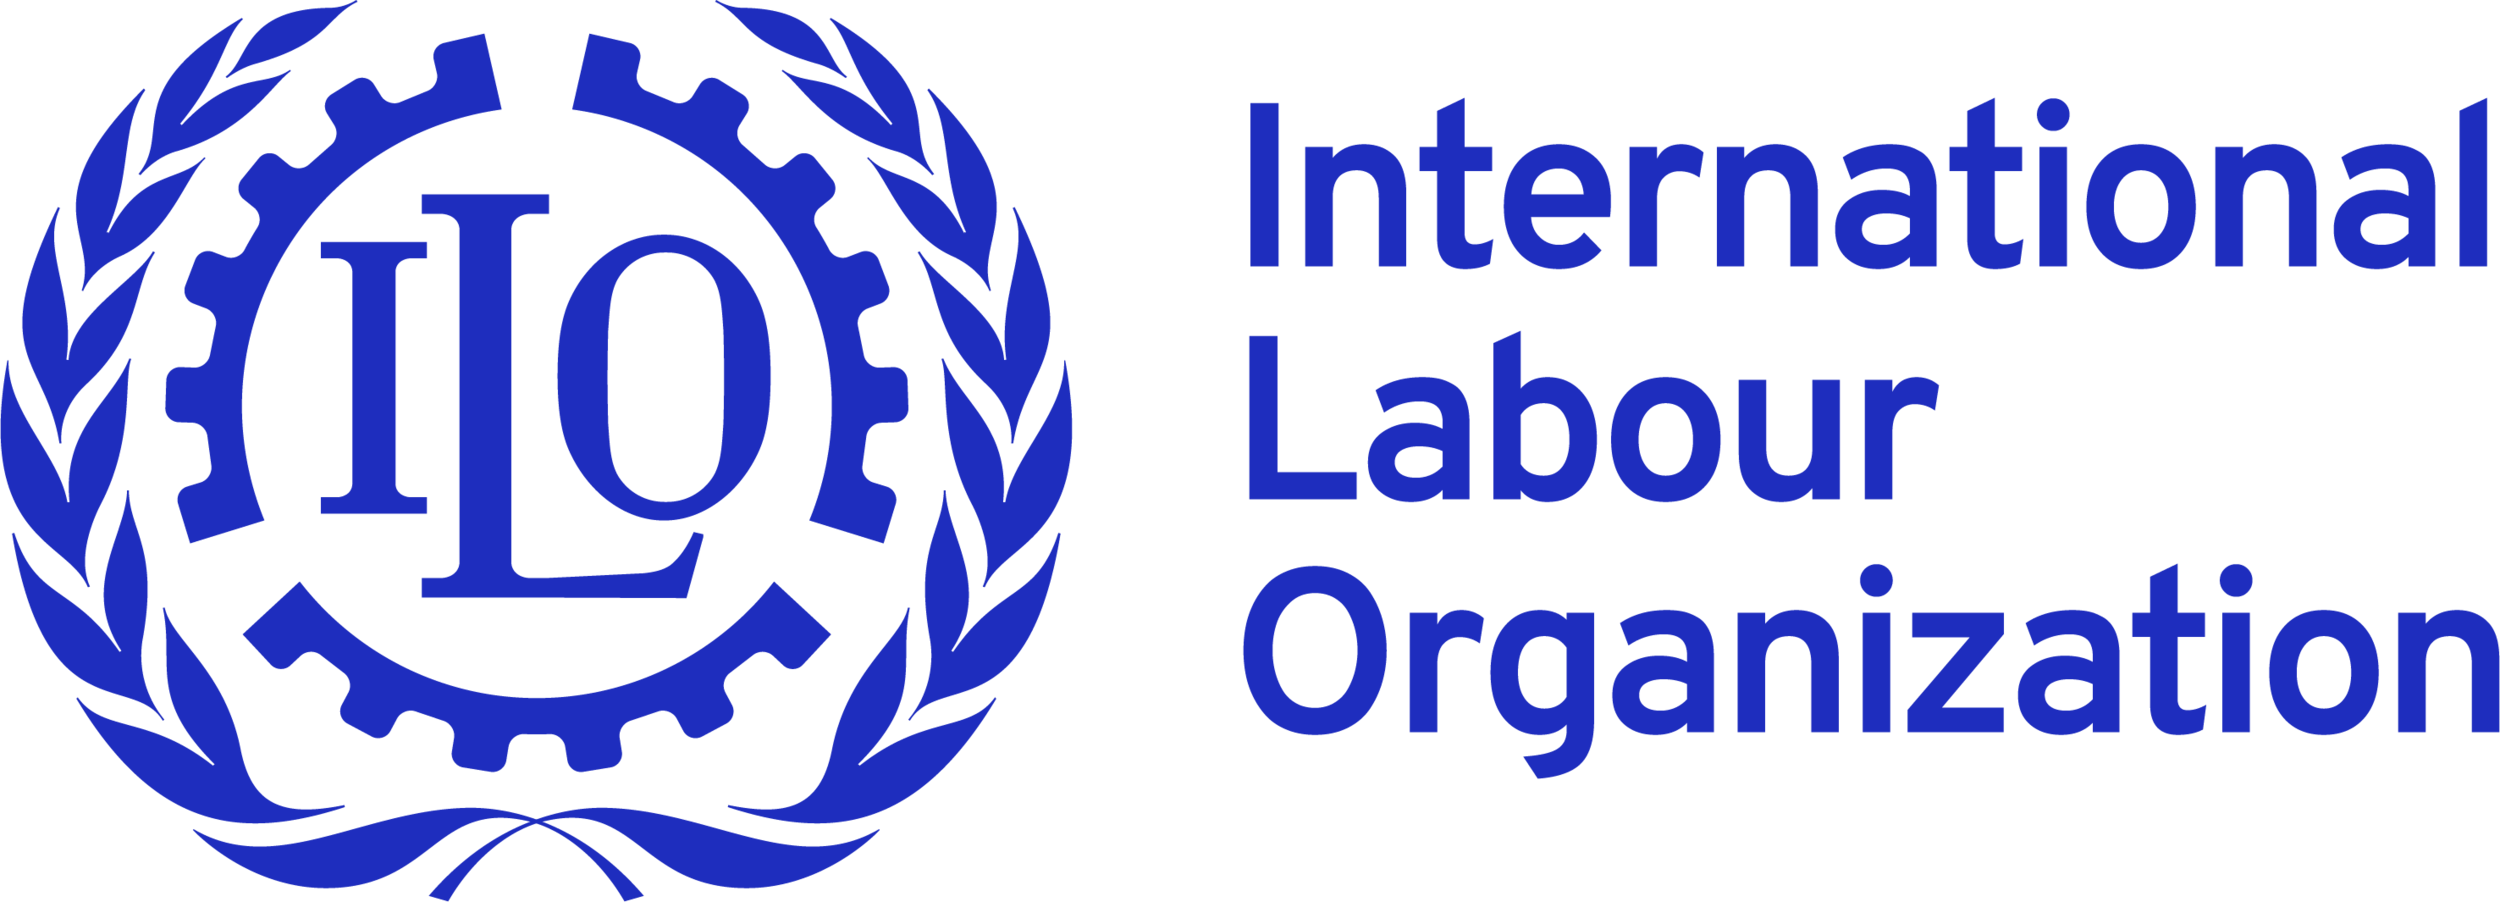 210_InternationalLabourOrganization_color_logo_5JXo2P.png